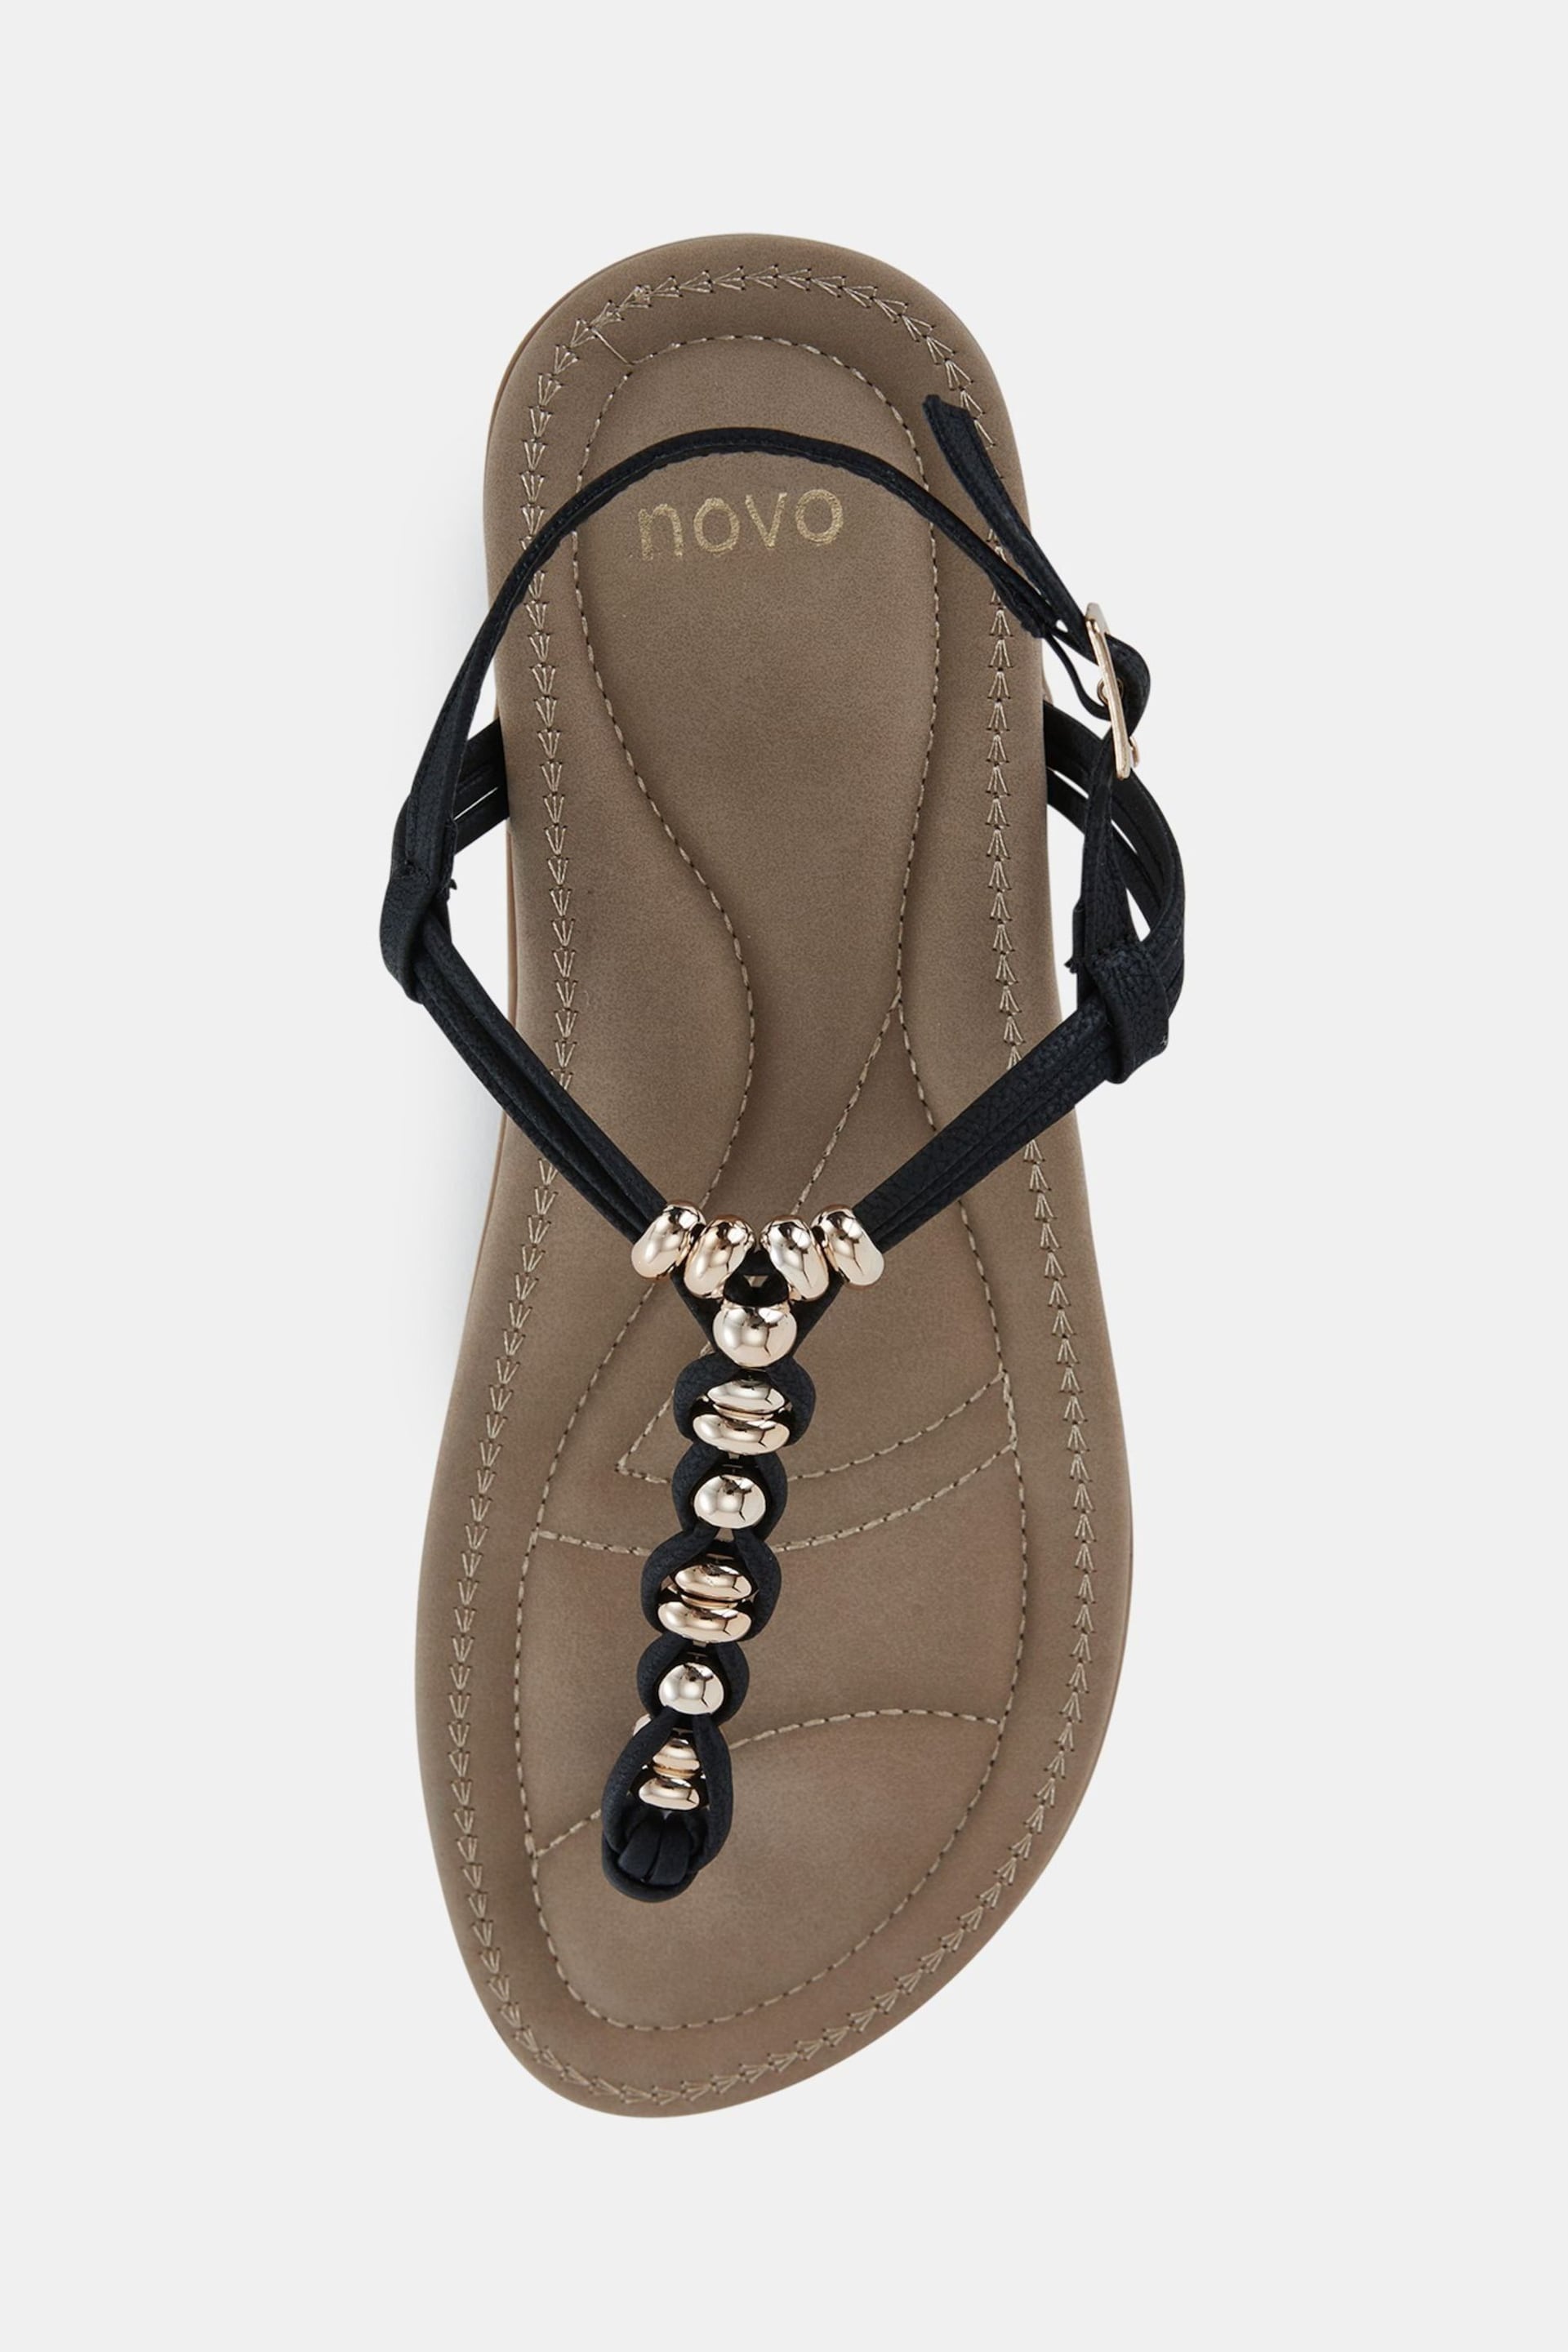 Novo Black Tara Toe Post Bead Sandals - Image 5 of 6